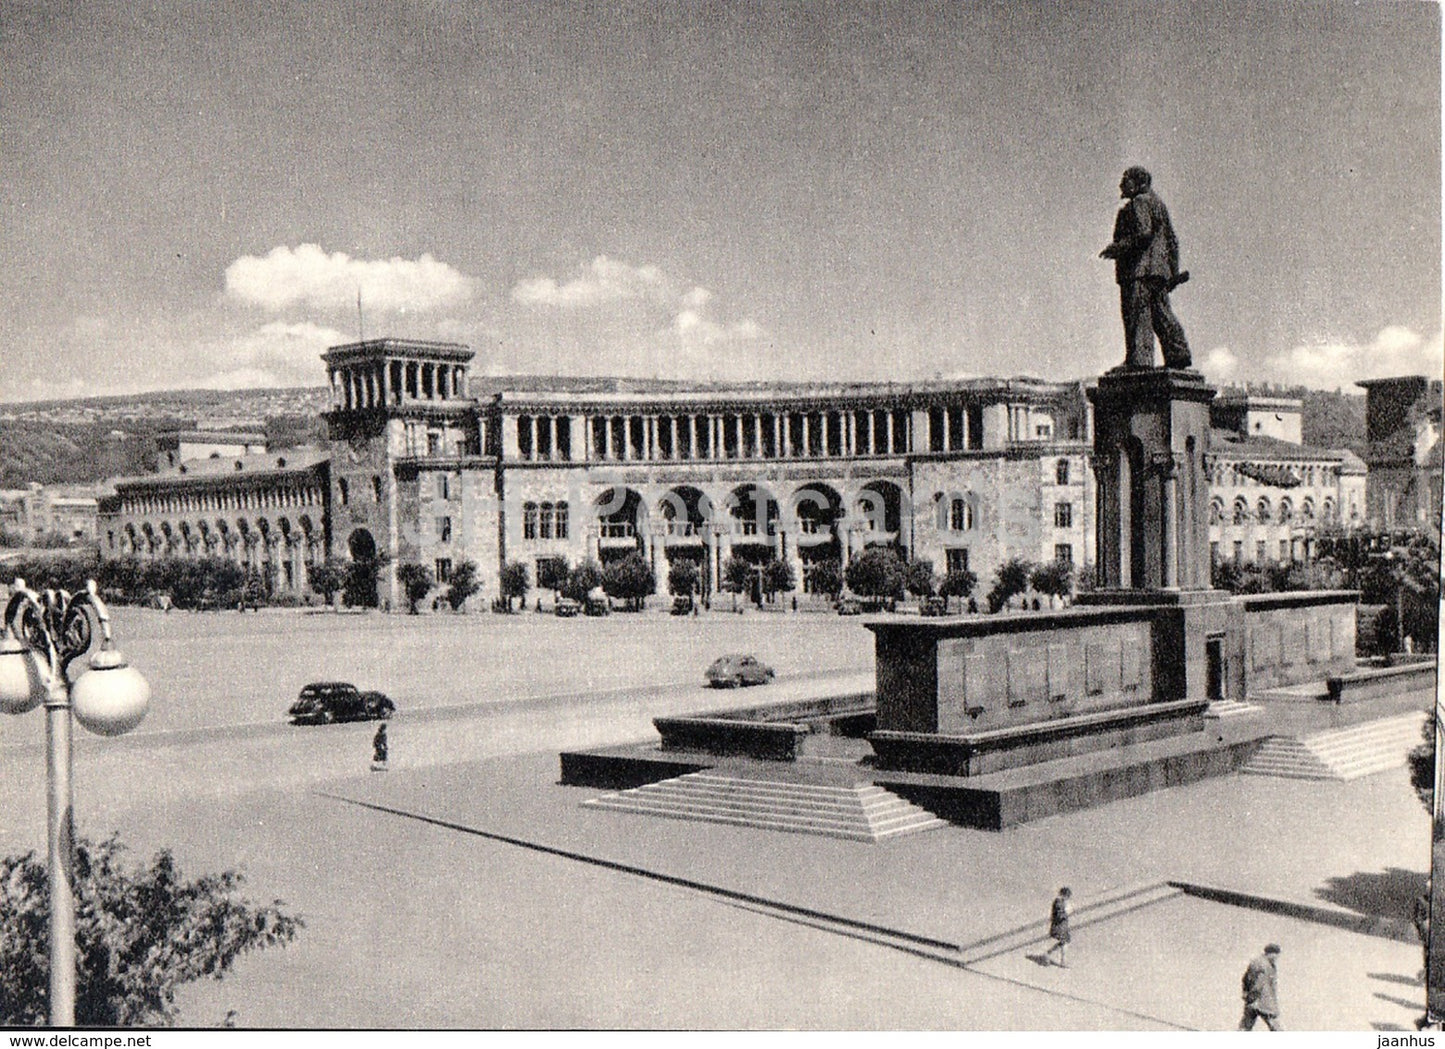 Yerevan - Lenin Square - Government House of Armenian SSR - Architecture in Armenia - 1966 - Armenia USSR - unused - JH Postcards